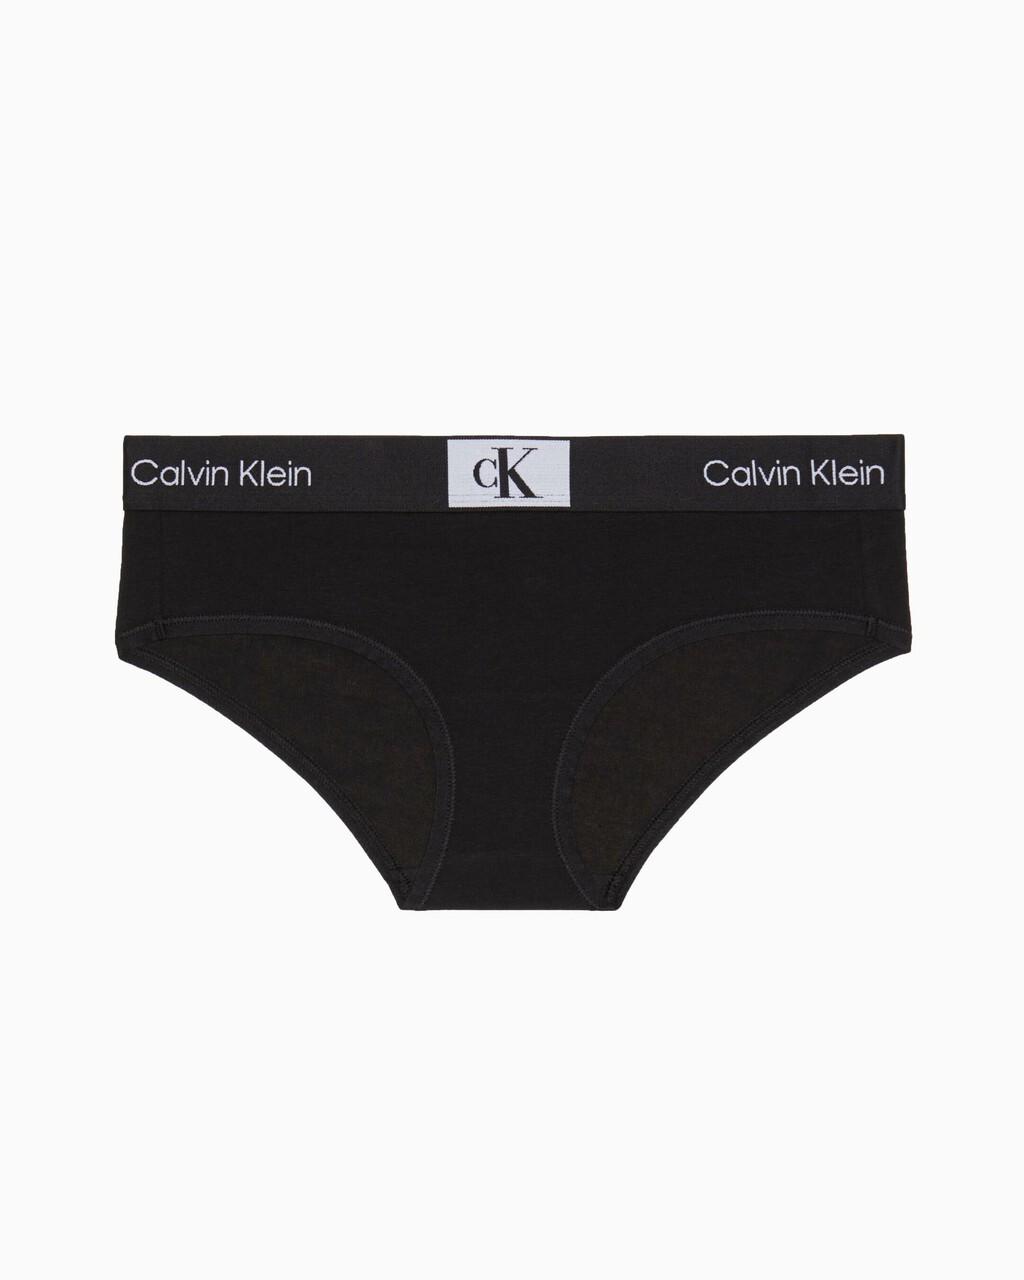 Calvin Klein 1996 Hipster, black